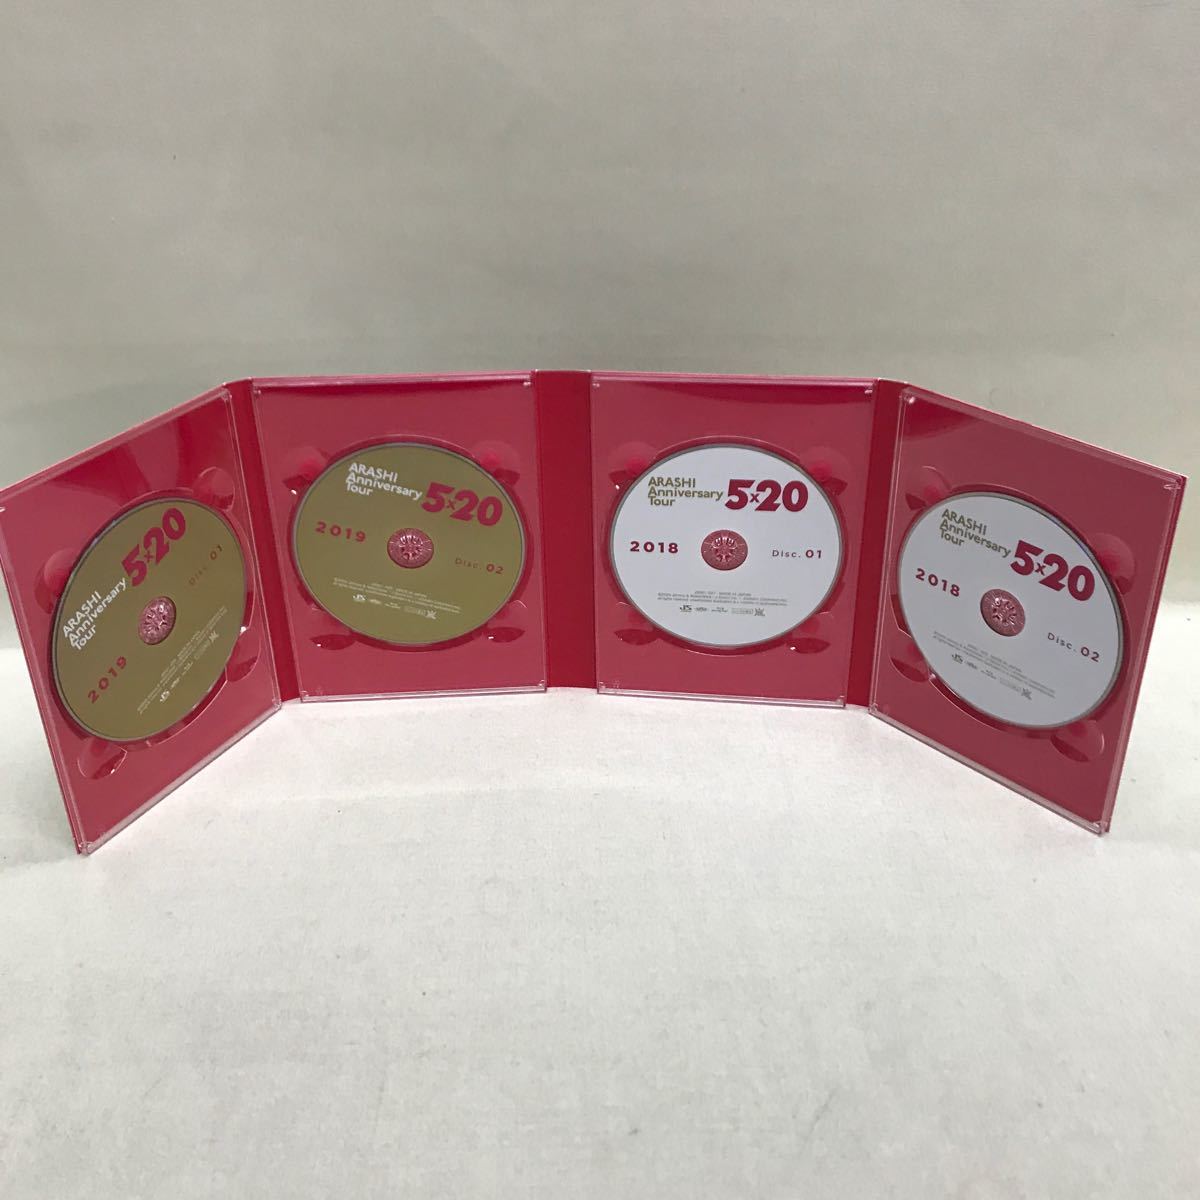 [3S08-144] free shipping storm ARASHI 5×20 CD-BOX + TOUR Blu-ray + Tour pamphlet 8 pcs. set sale 